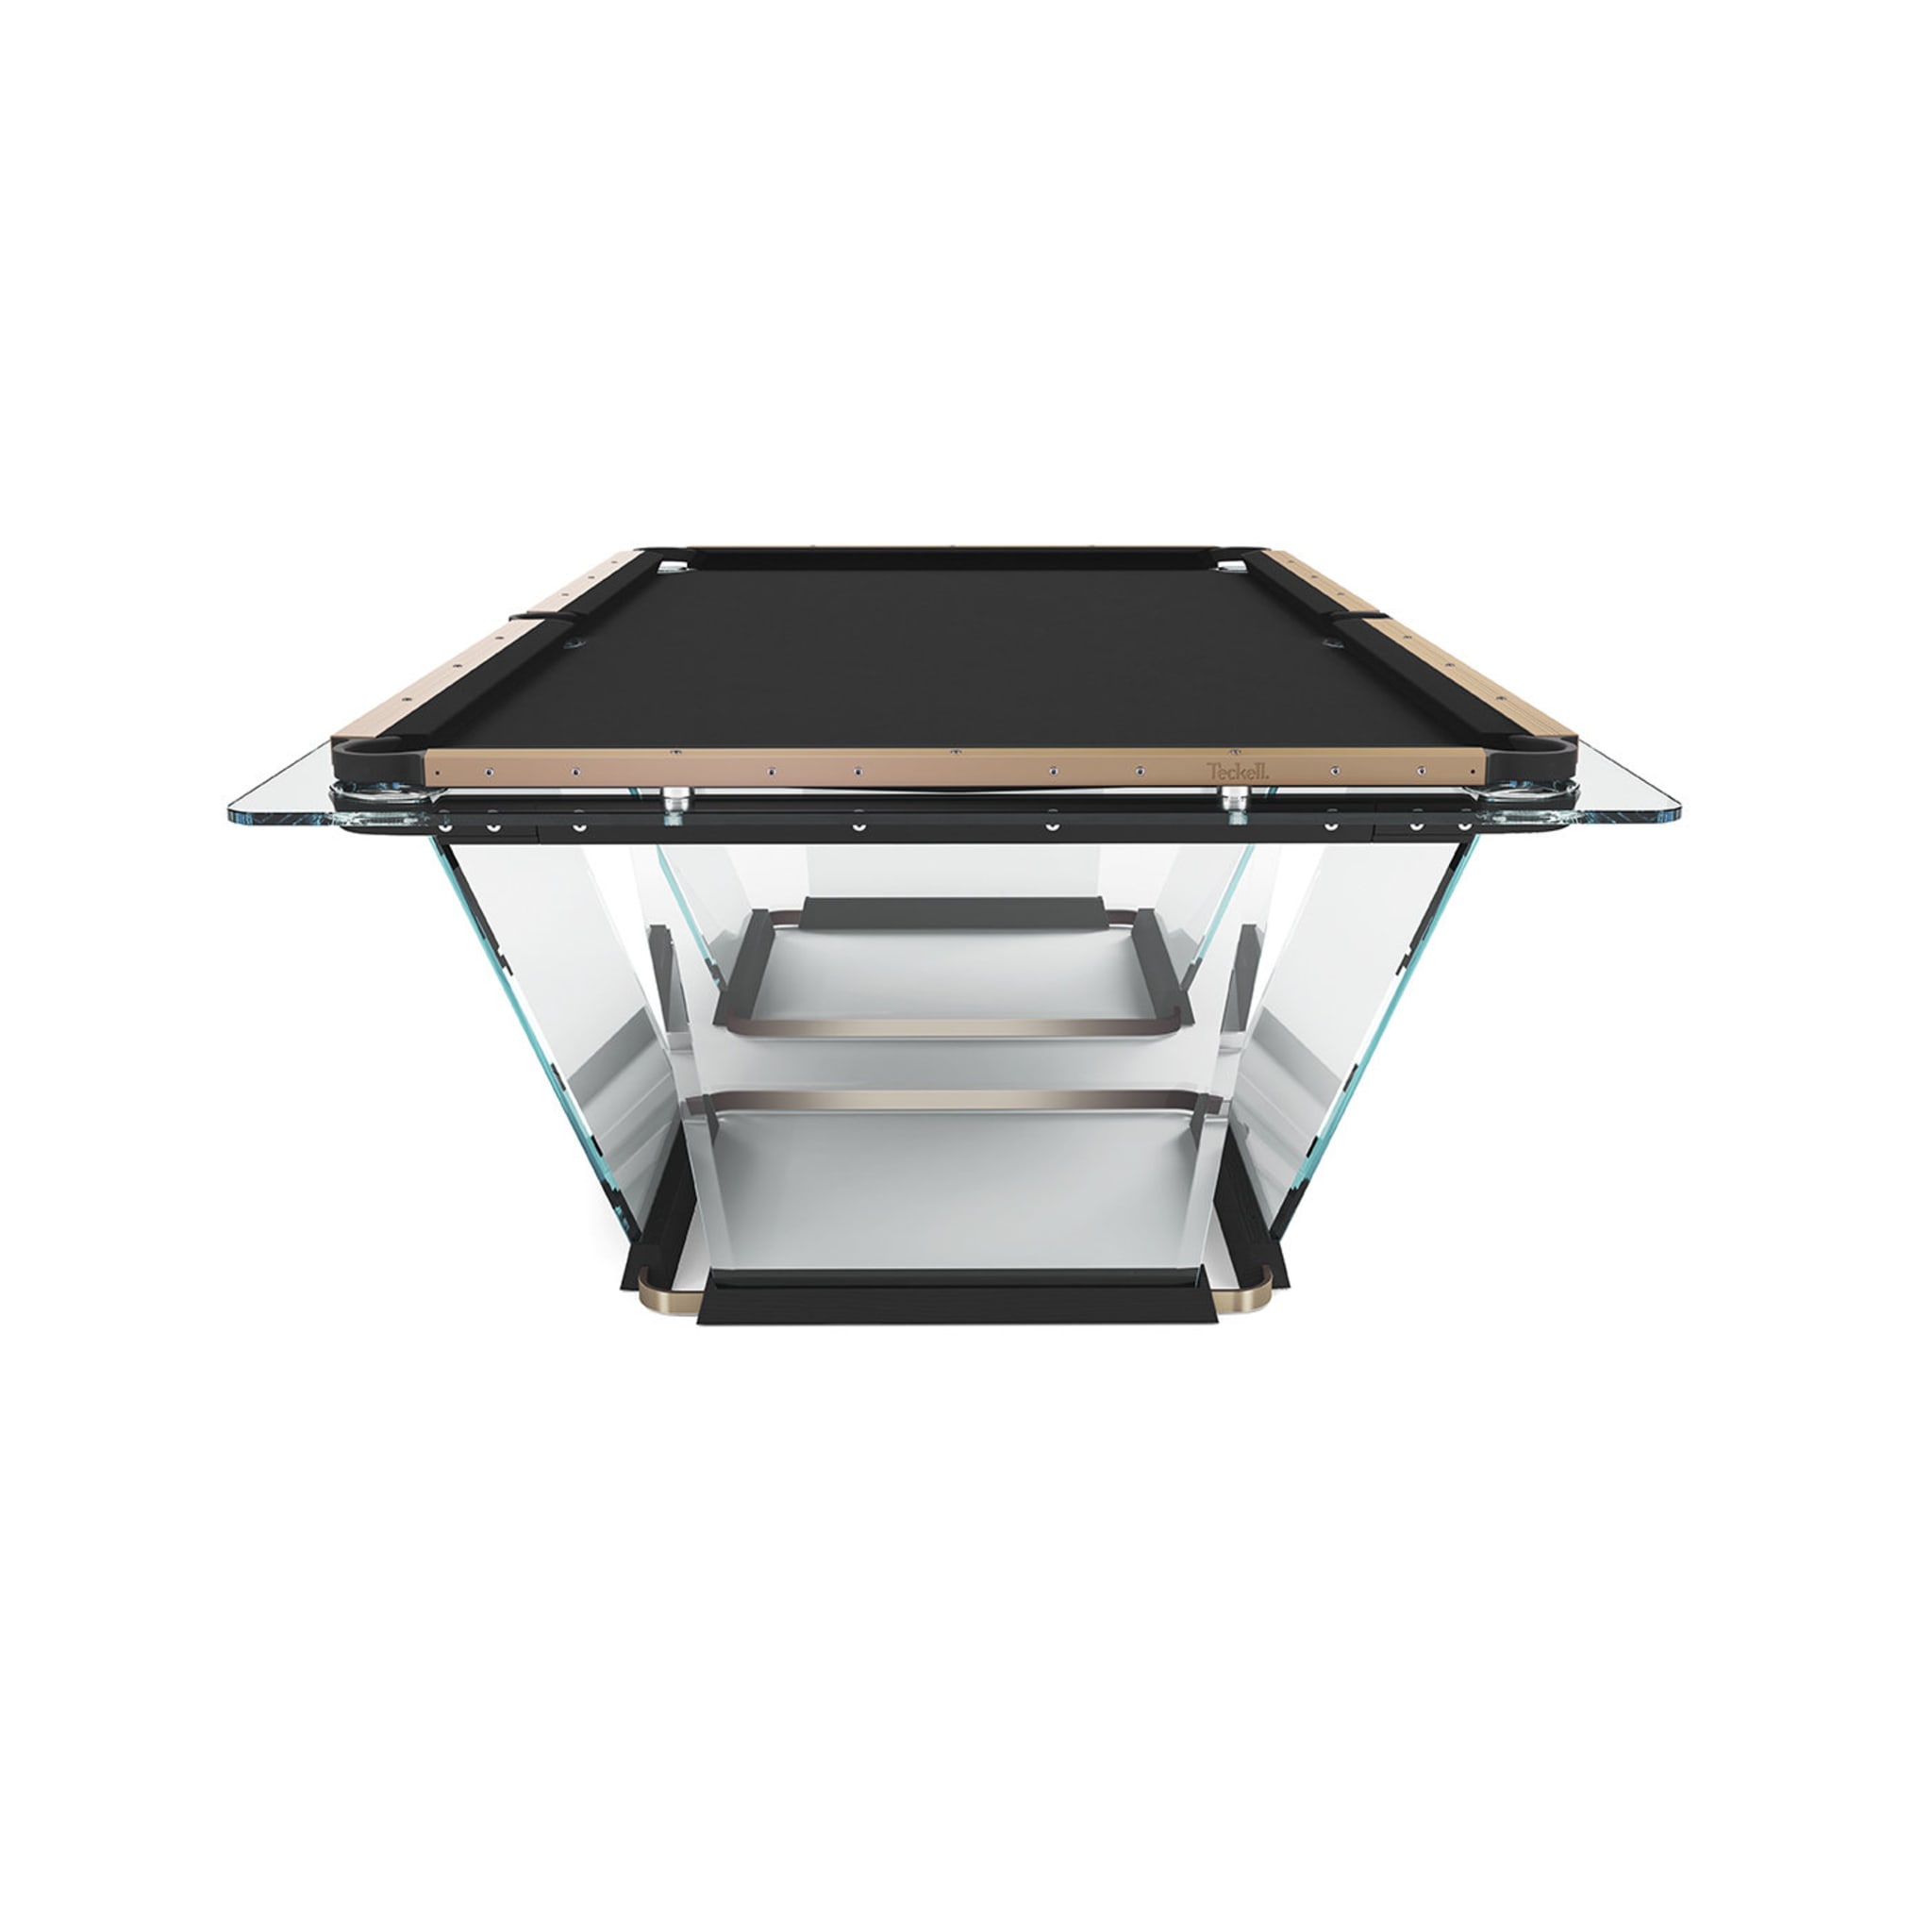 T1.1 Pool Table Light-bronze -8ft - Alternative view 1